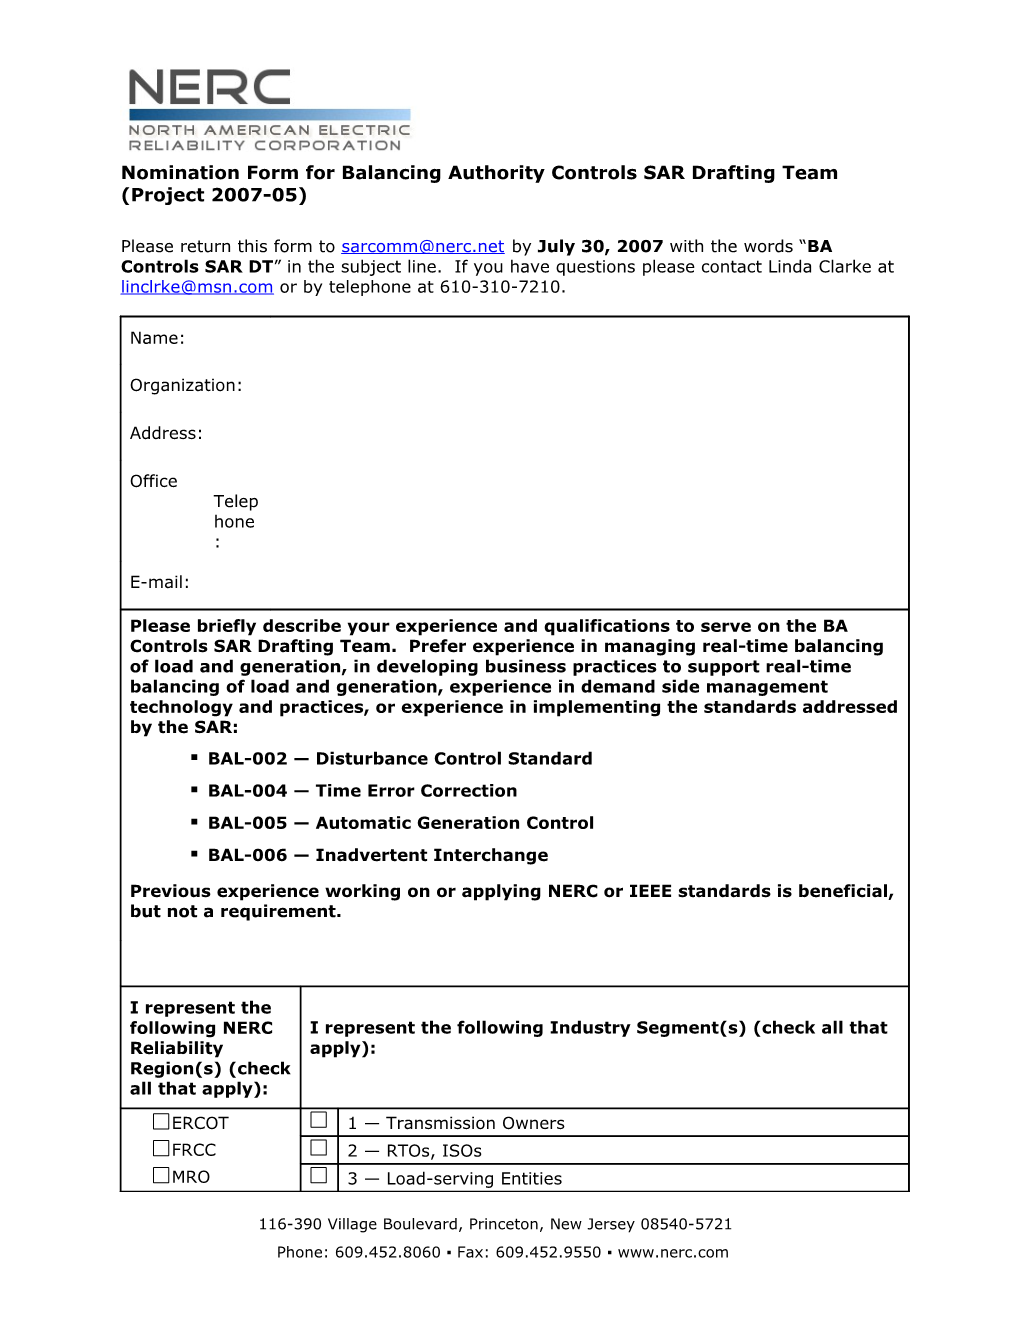 Subject Matter Expert Self-Nomination Form for Standard Drafting Team